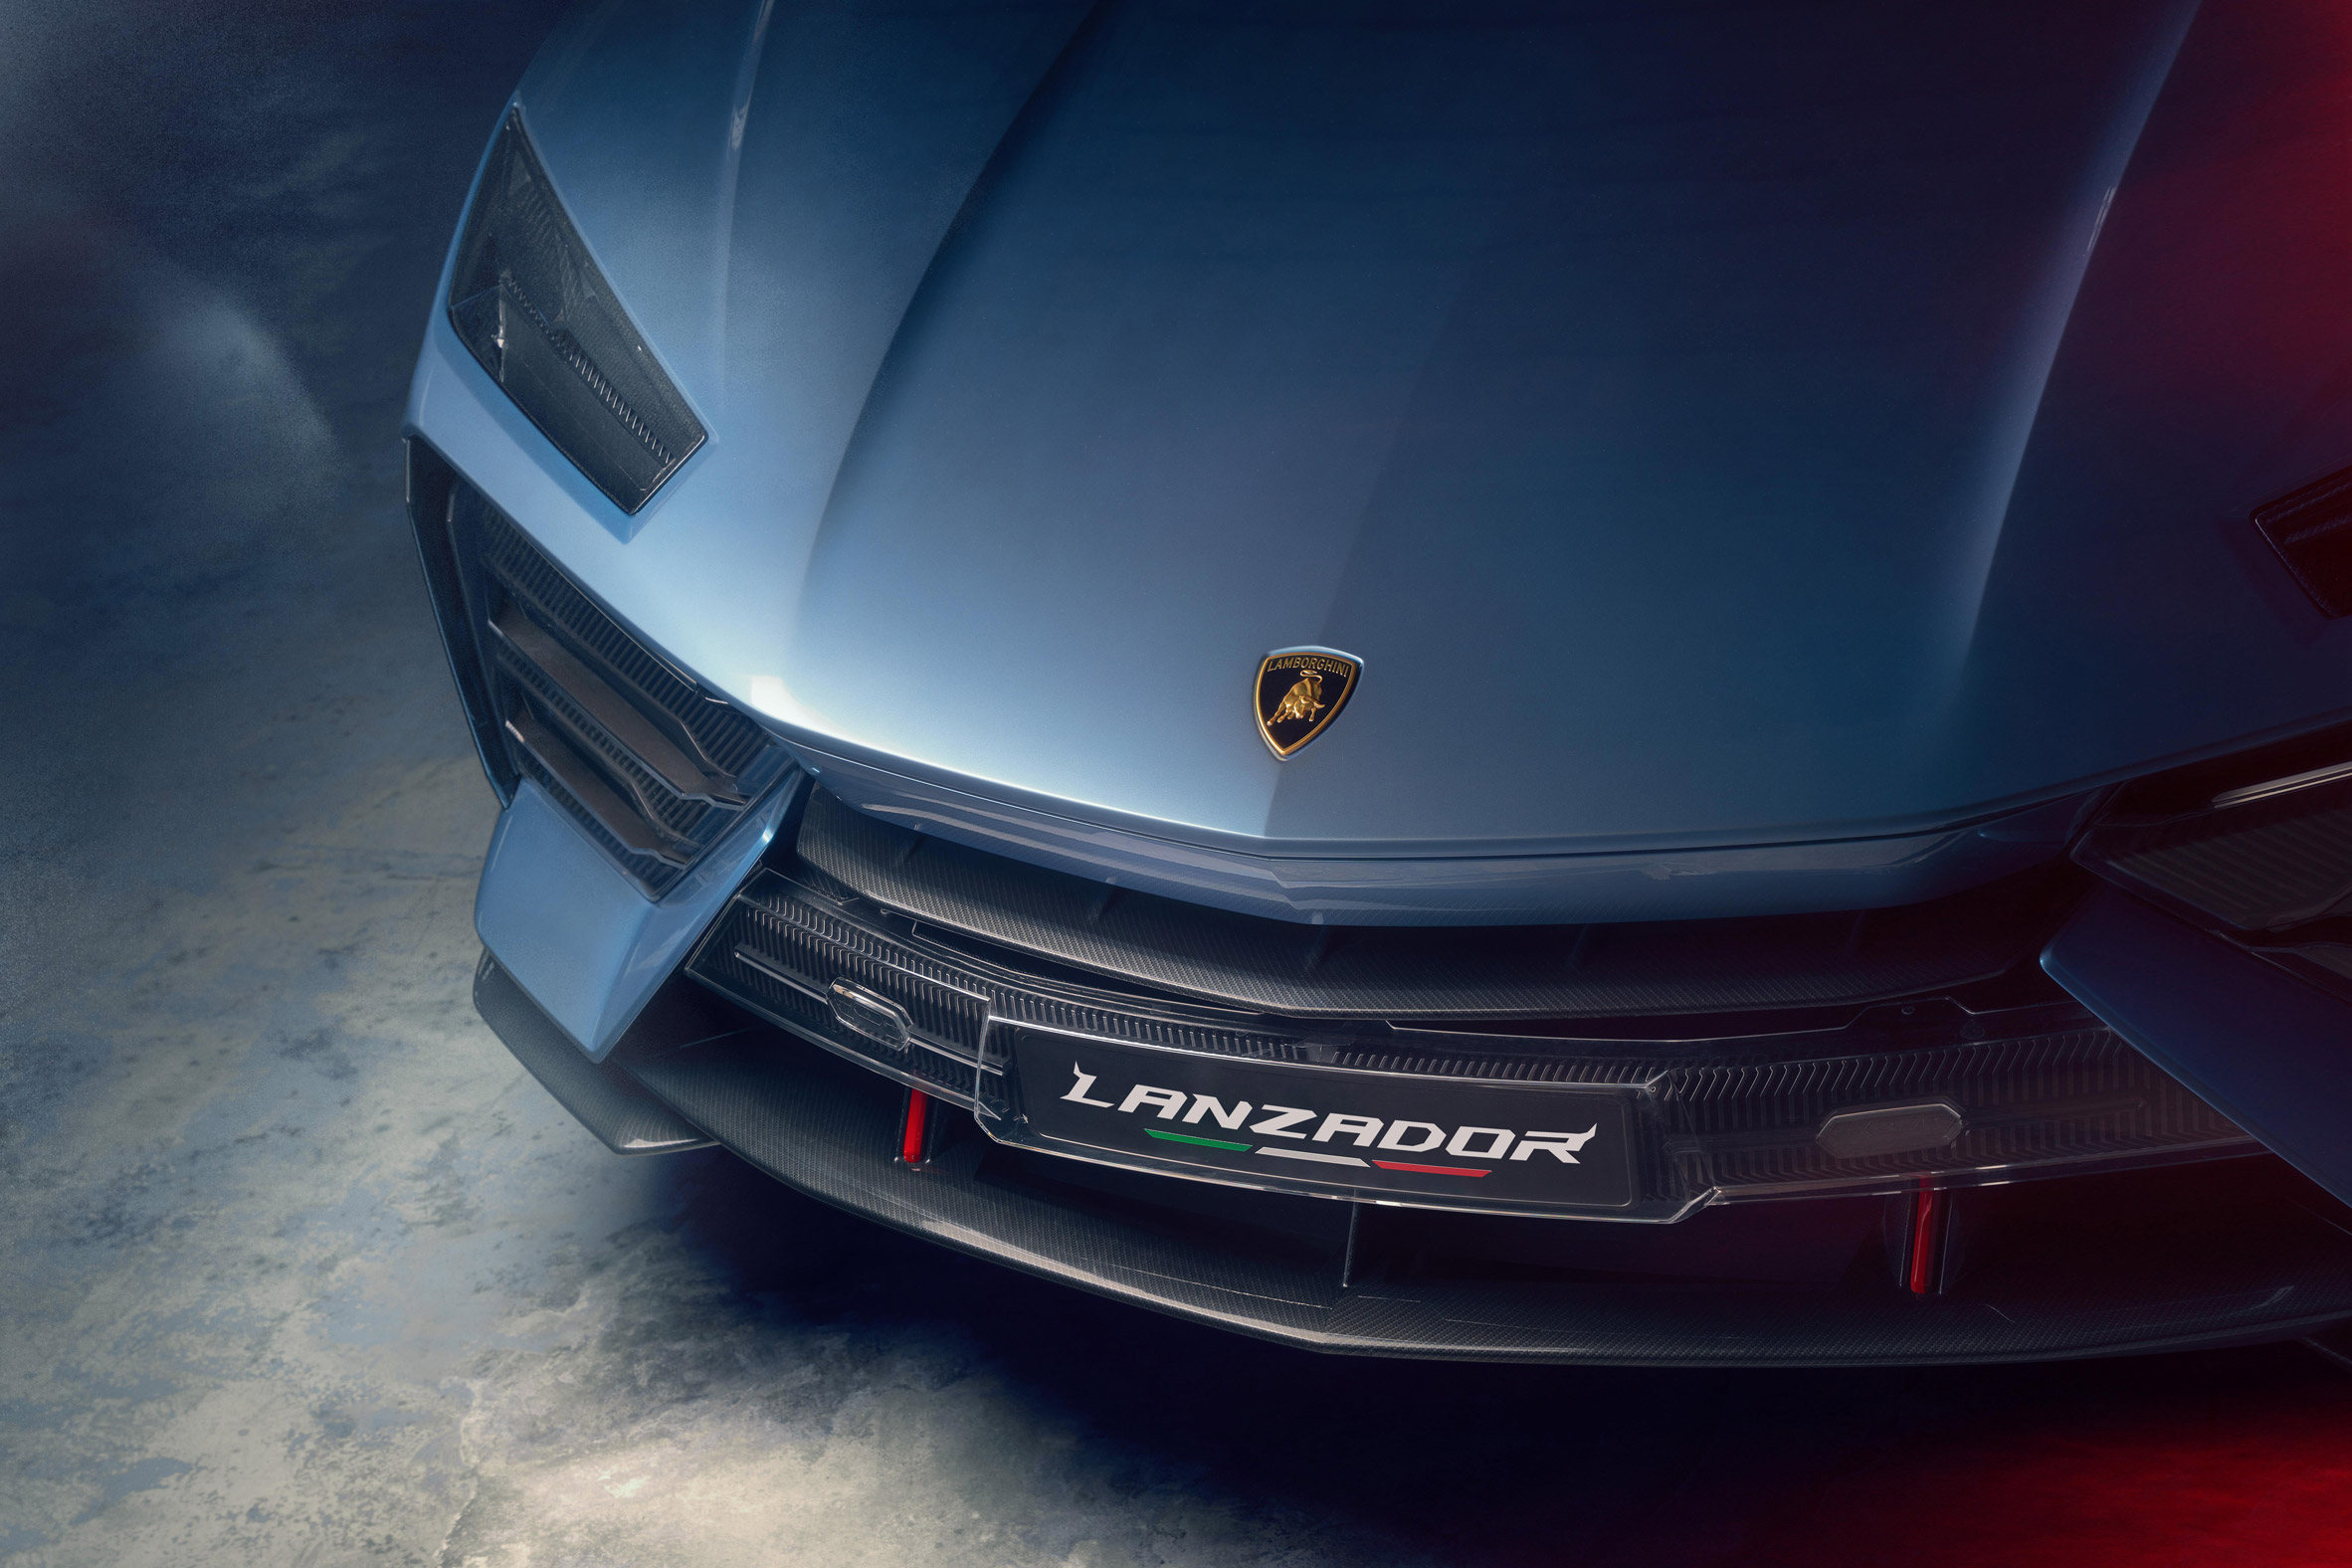 Lamborghini unveils new insane-looking electric supercar concept with  supercapacitors